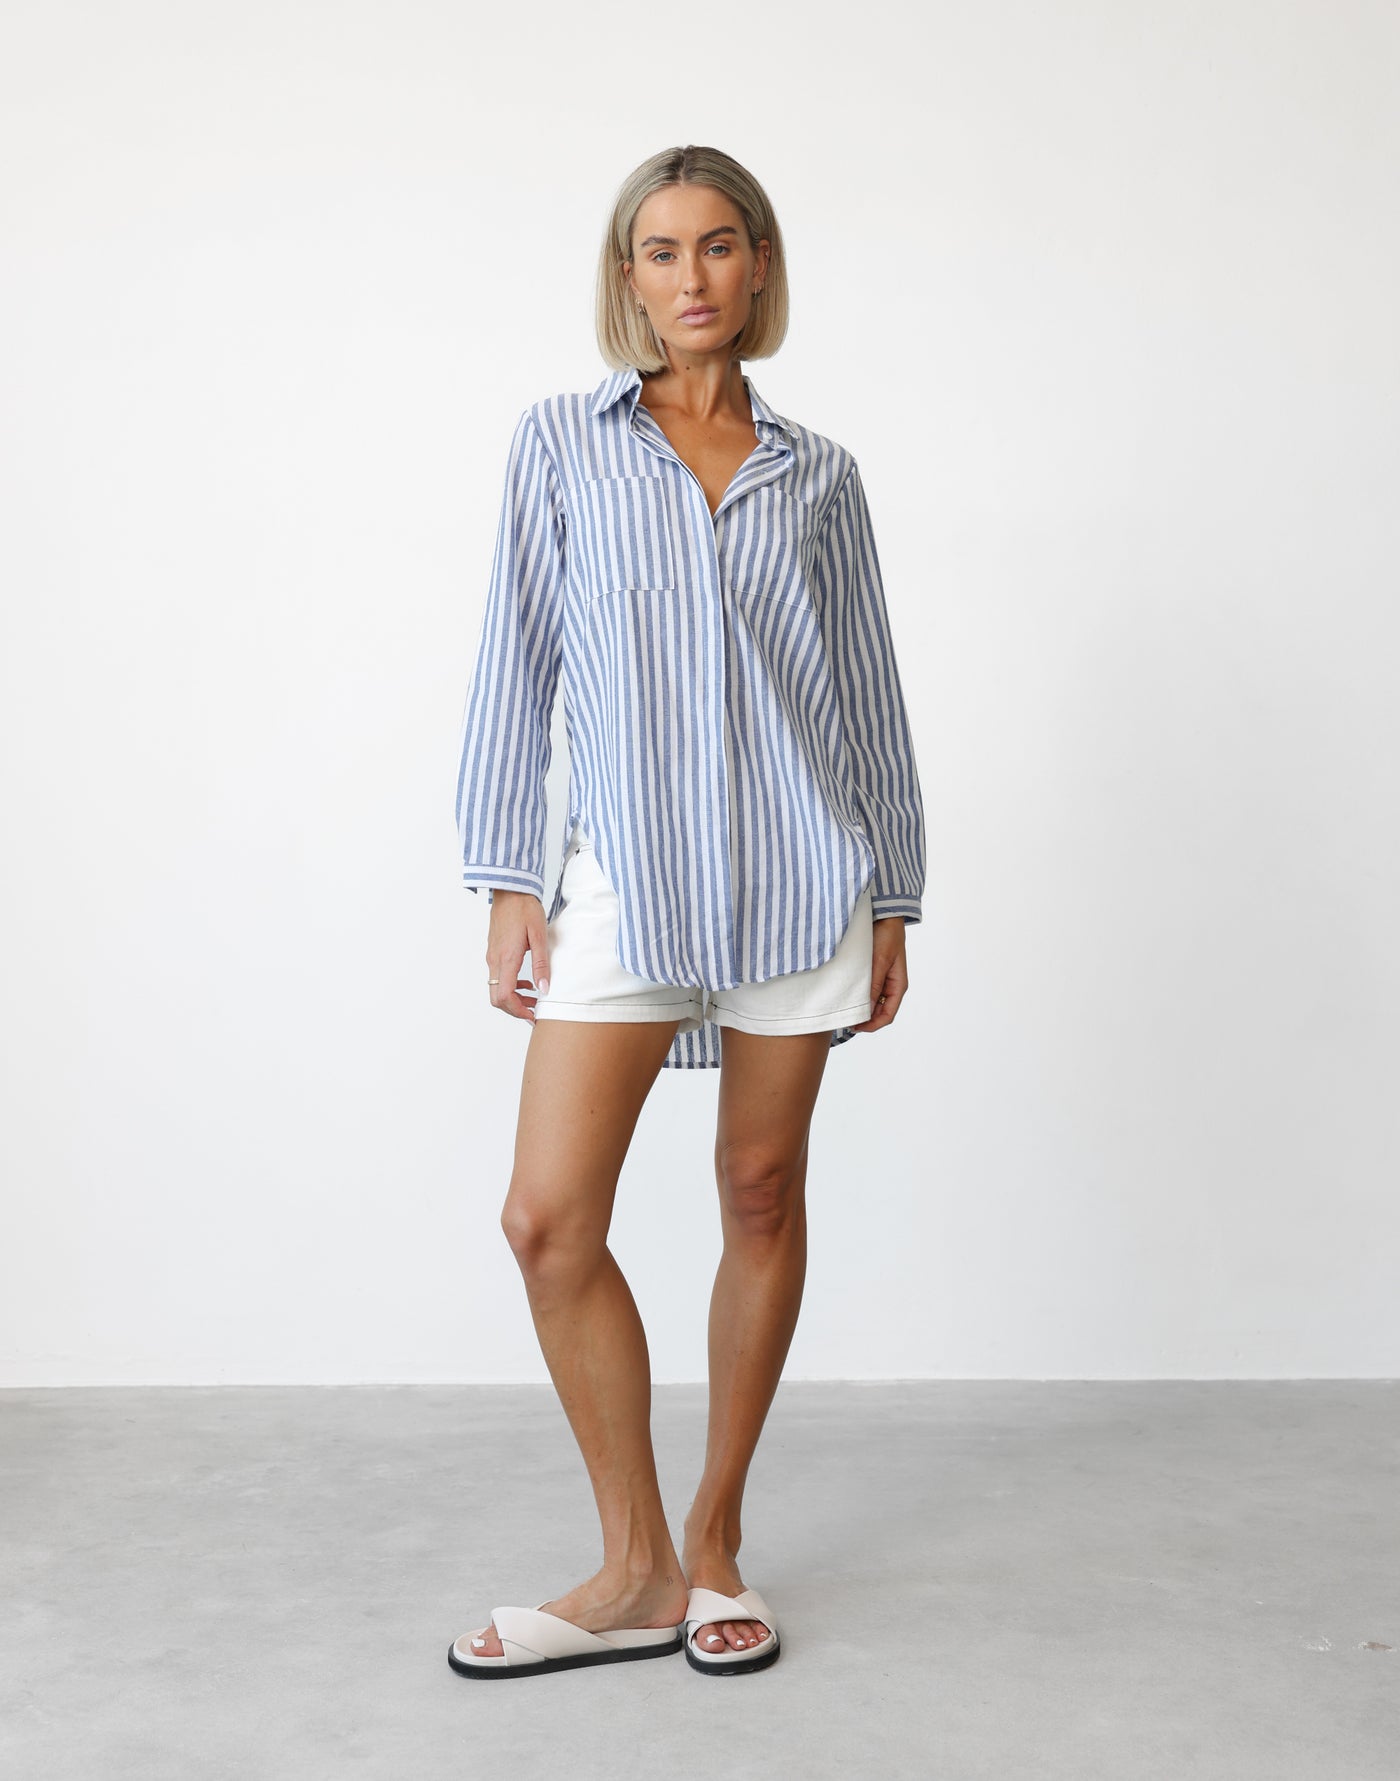 Ivani Shirt (Blue Stripe) - Blue/White Stripe Oversized Rounded Hem Side Split Shirt - Women's Top - Charcoal Clothing